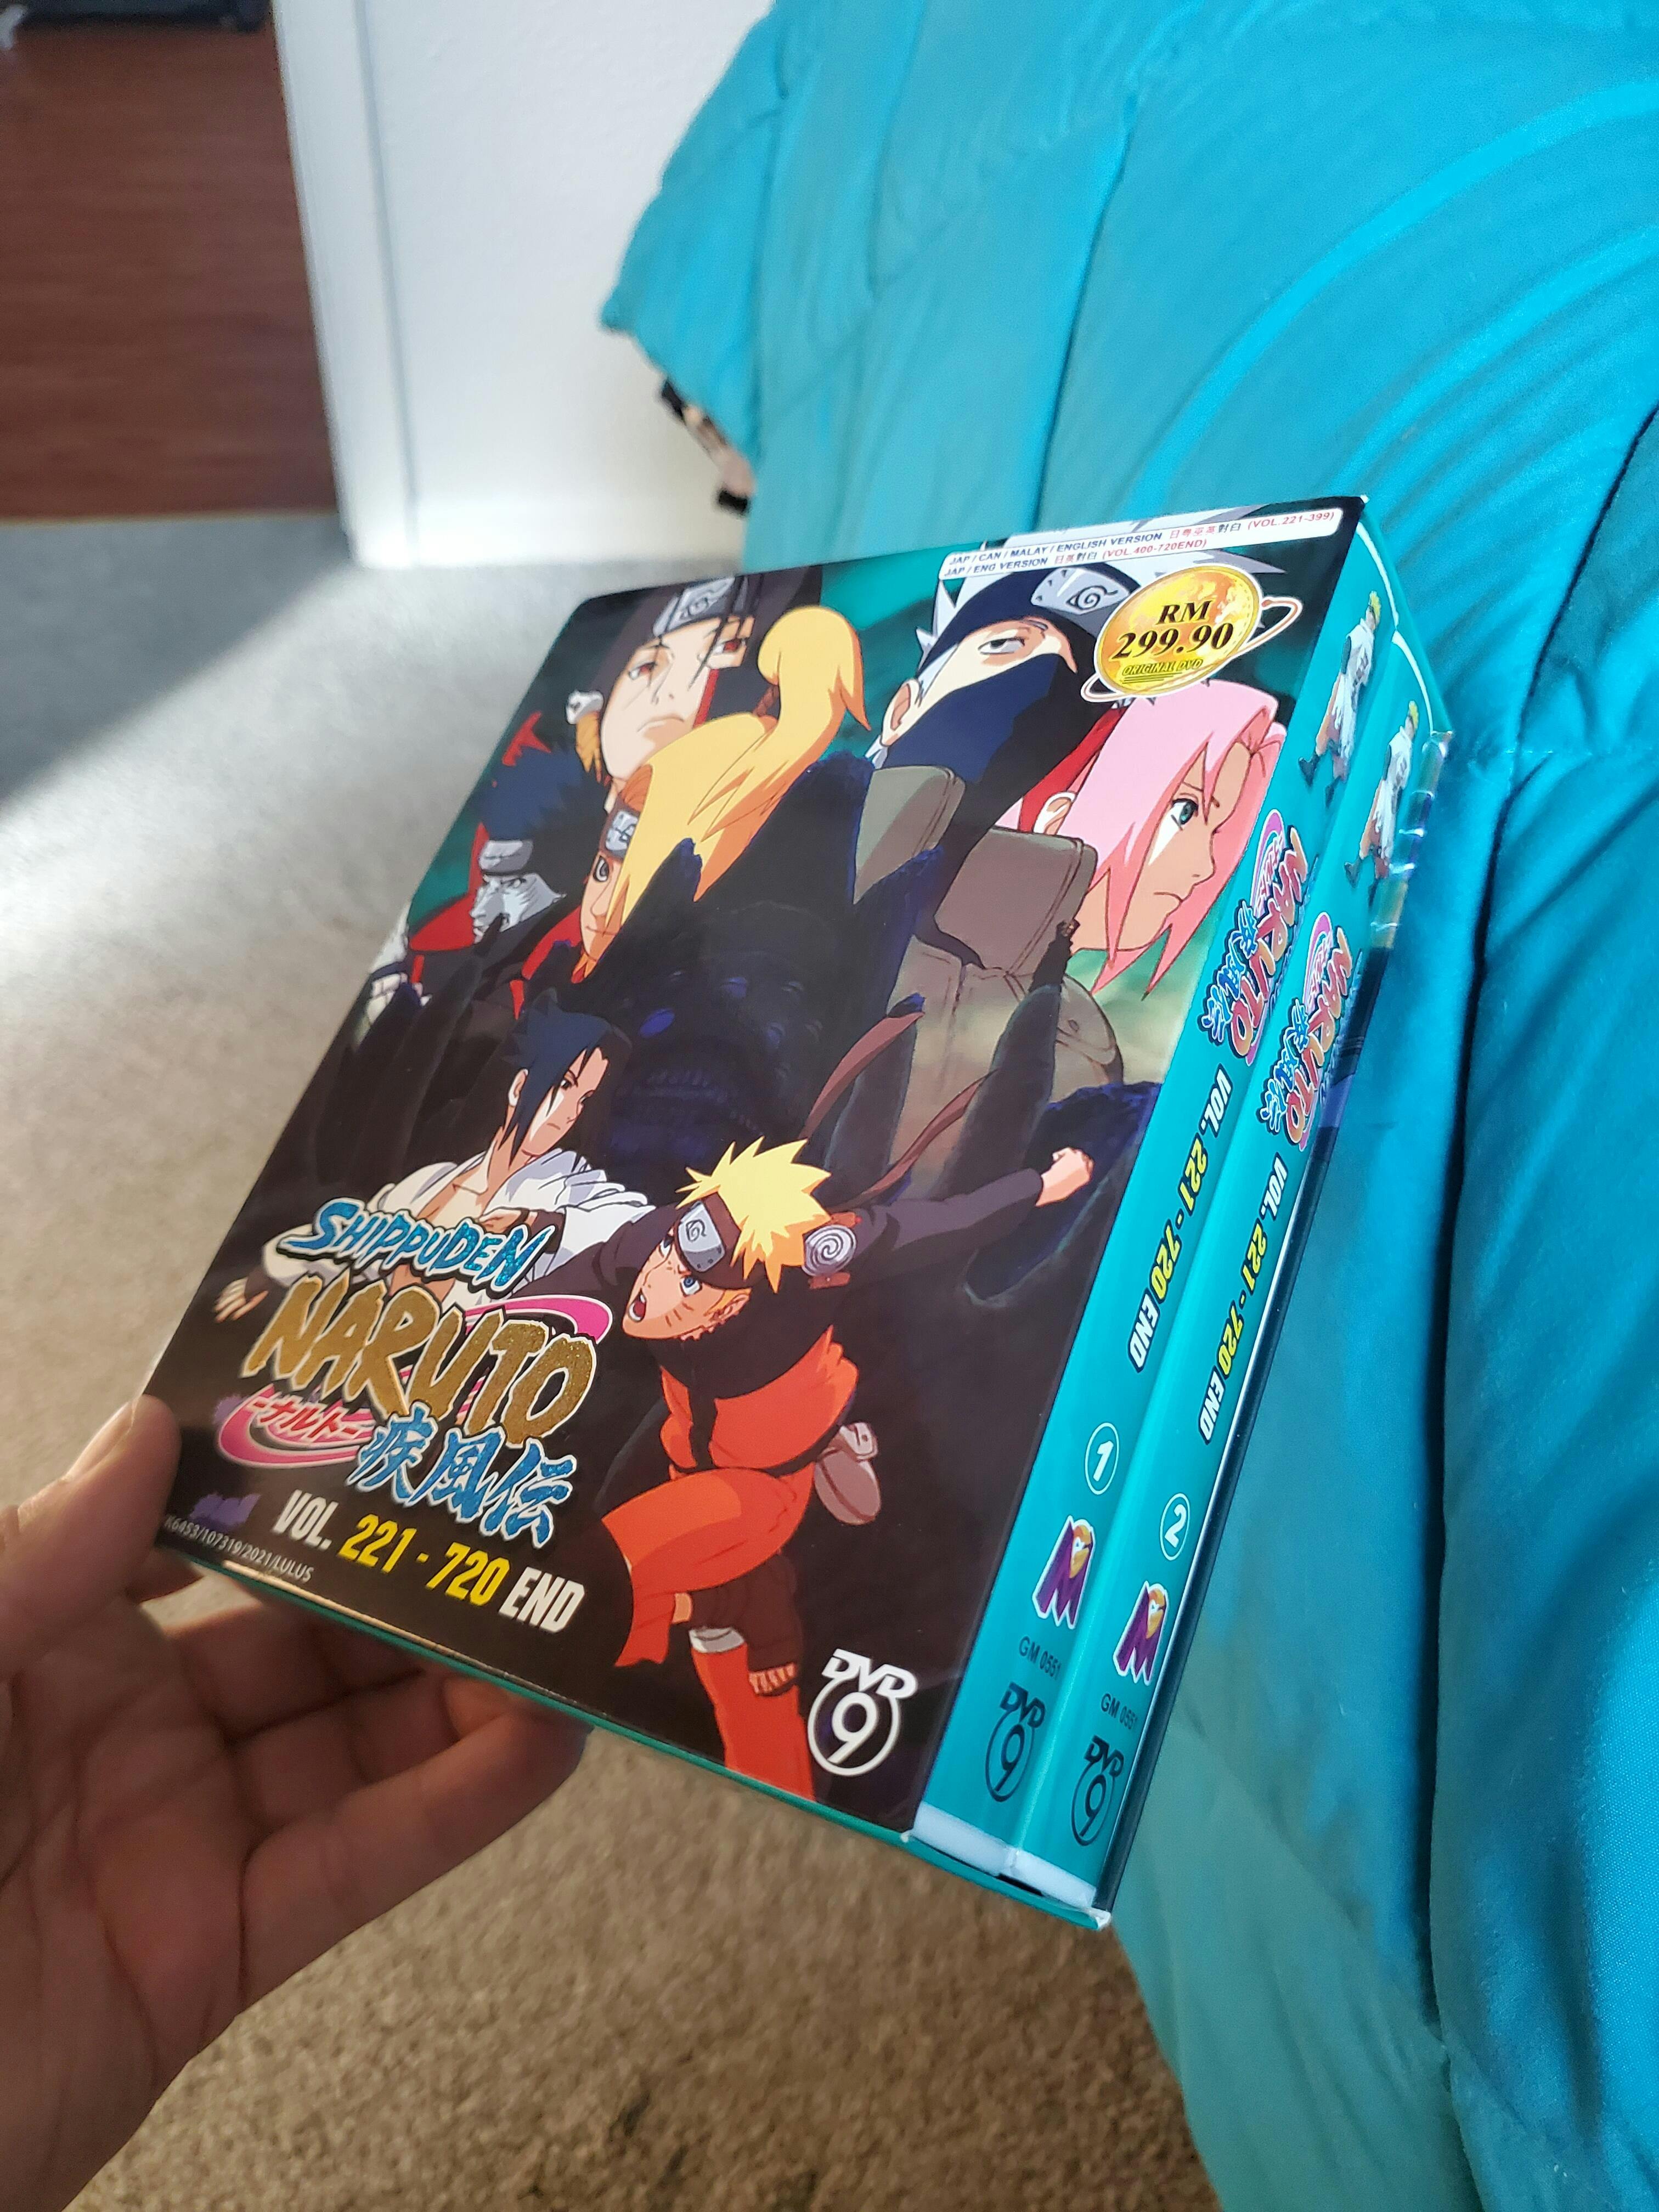  Review for Naruto Shippuden: Box Set 25 (2 Discs)